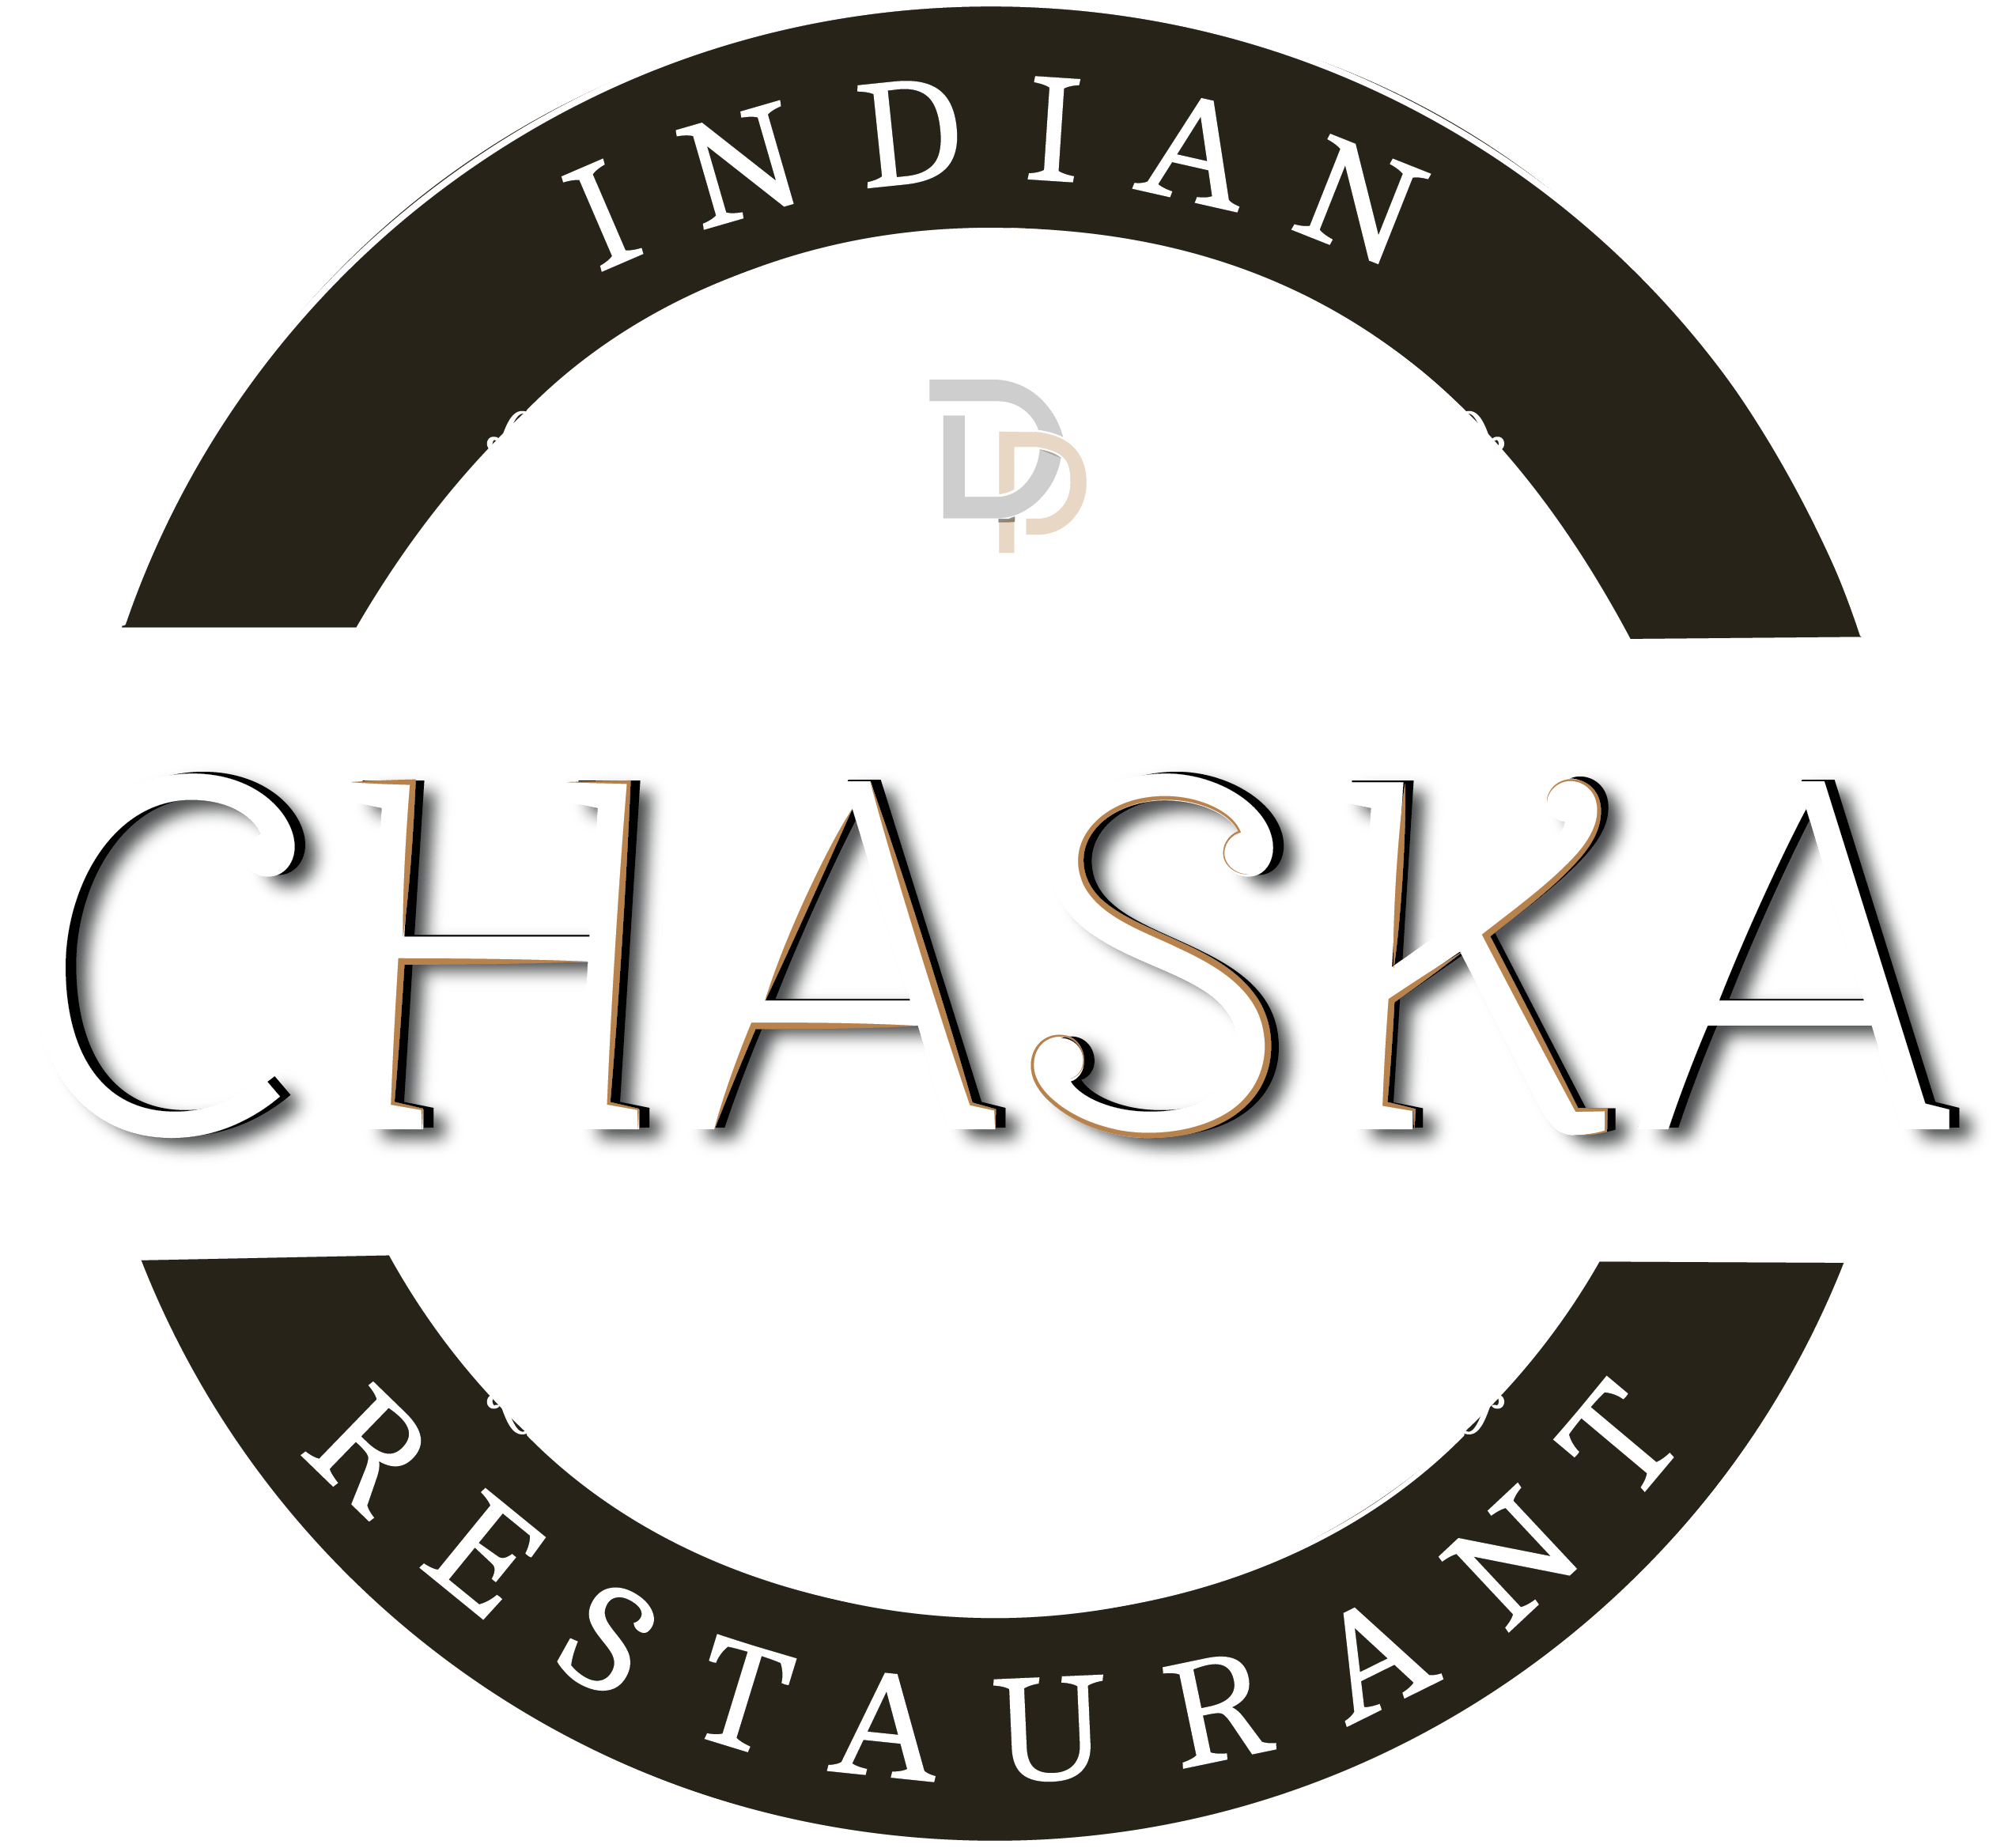 Chaska Indian Restaurant logo